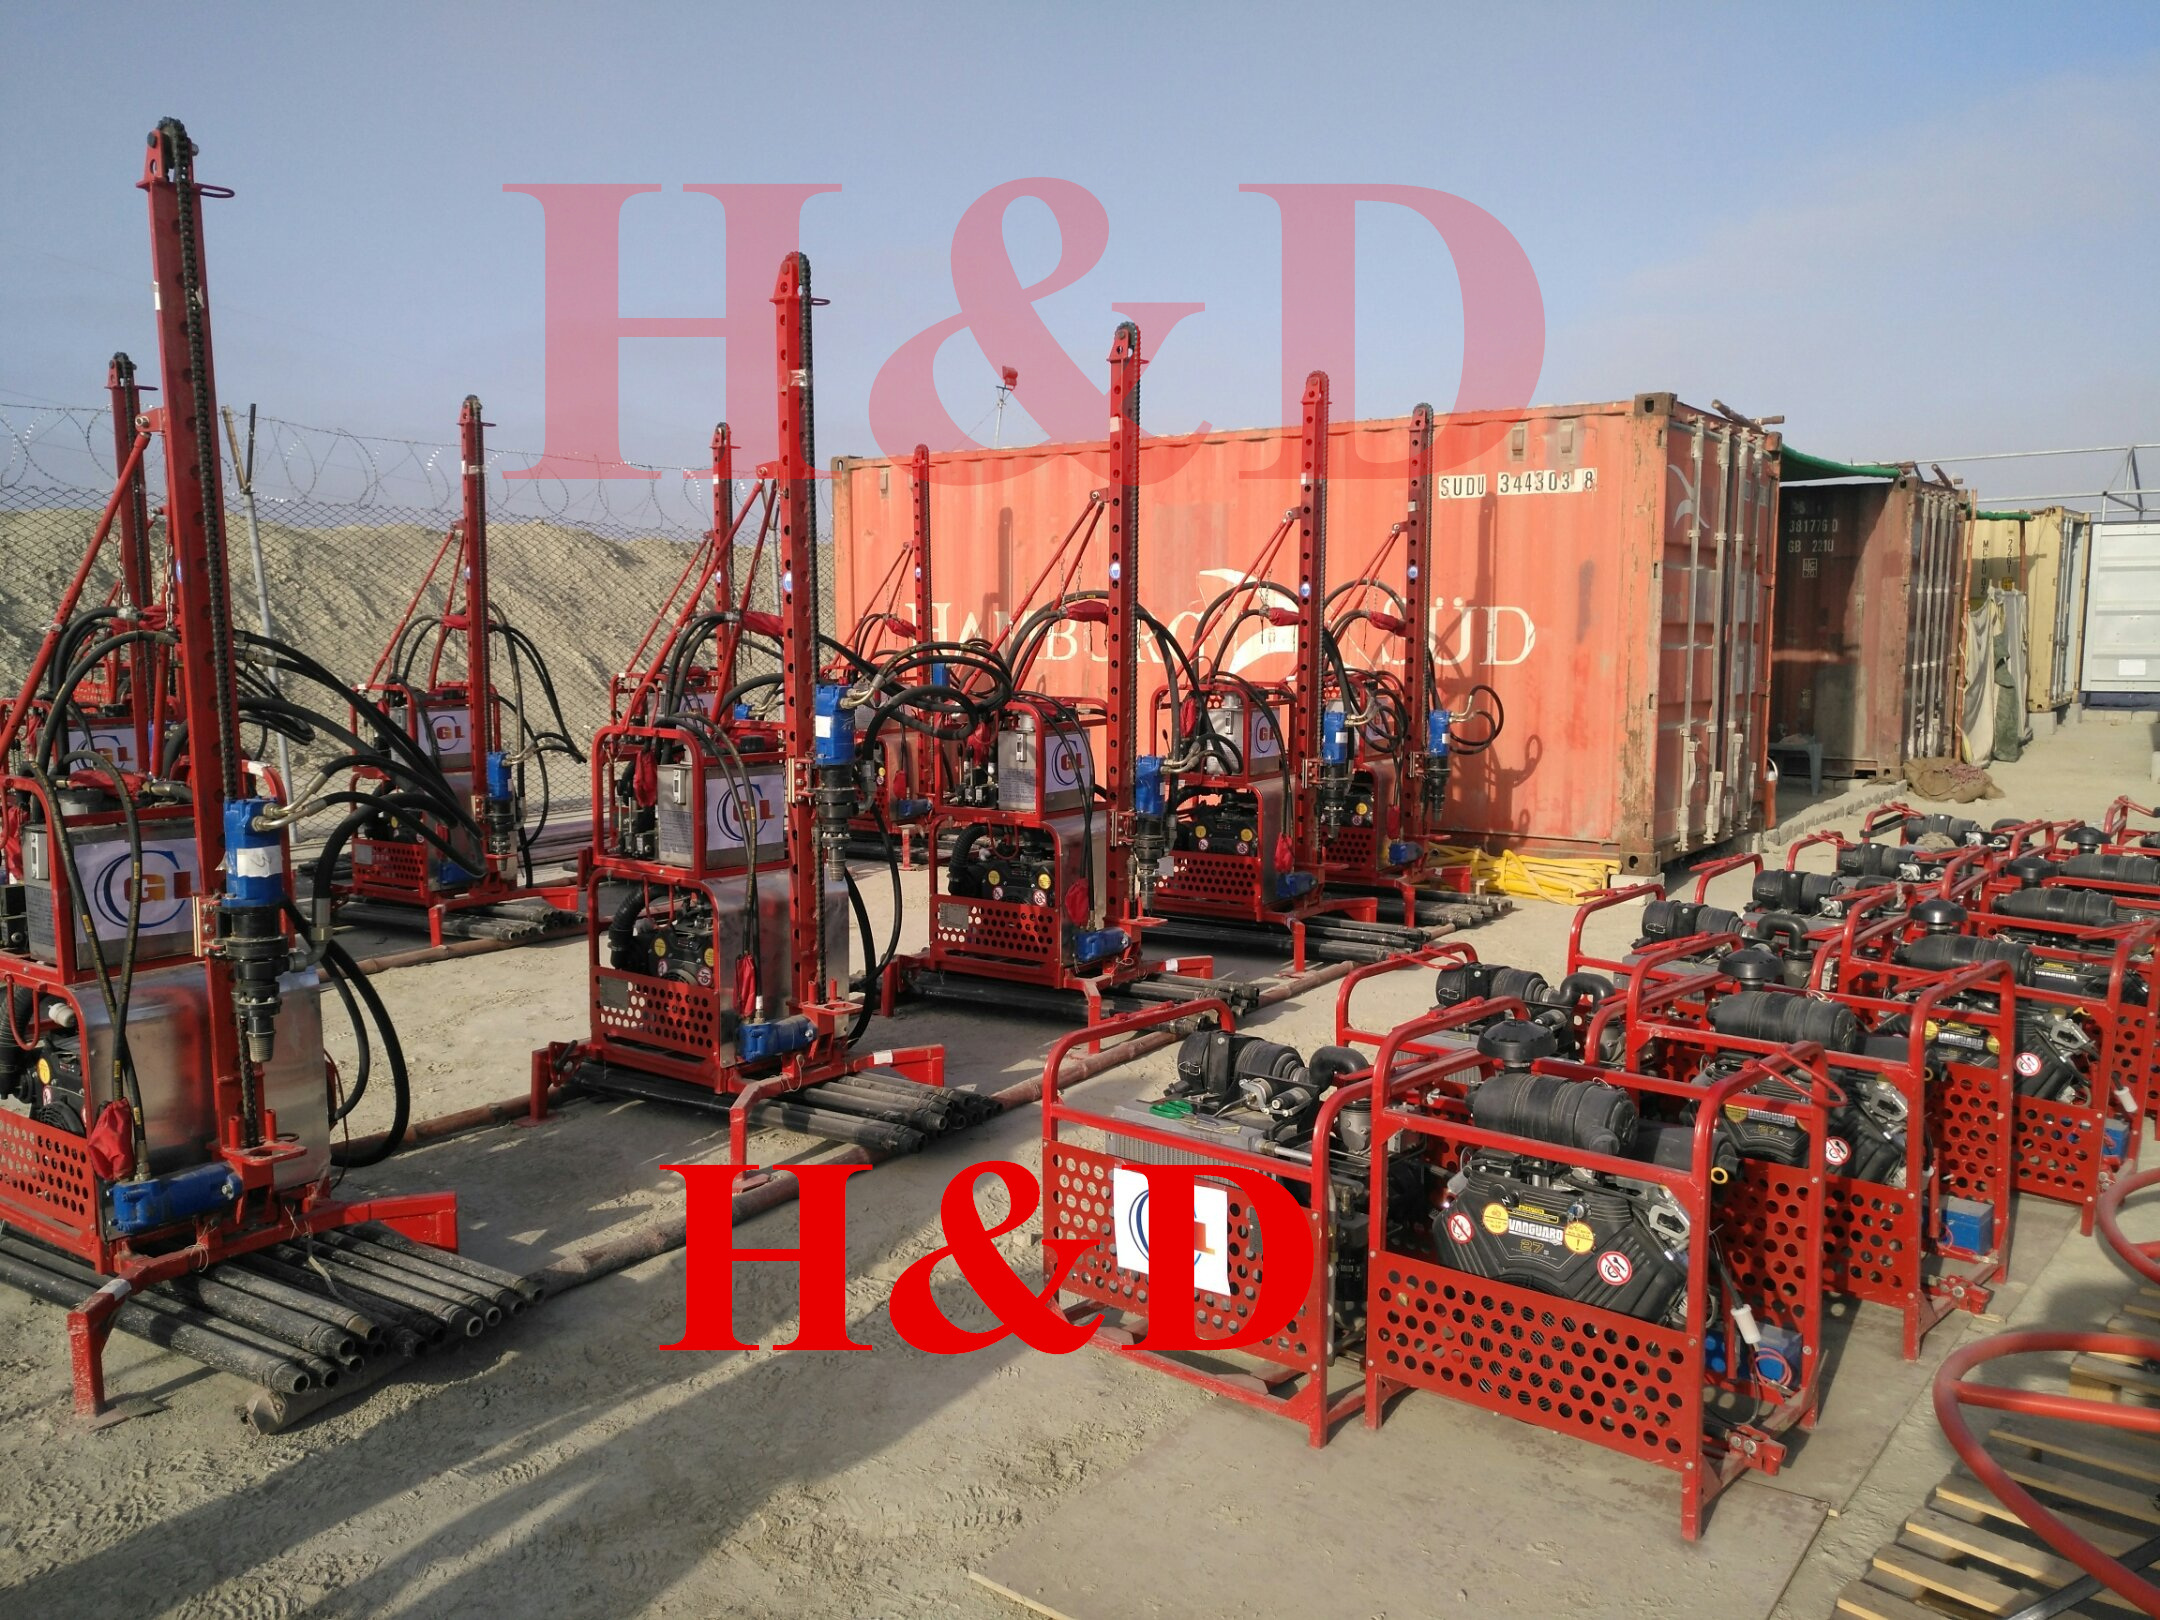 HD-40C Man Portable Drilling Rig